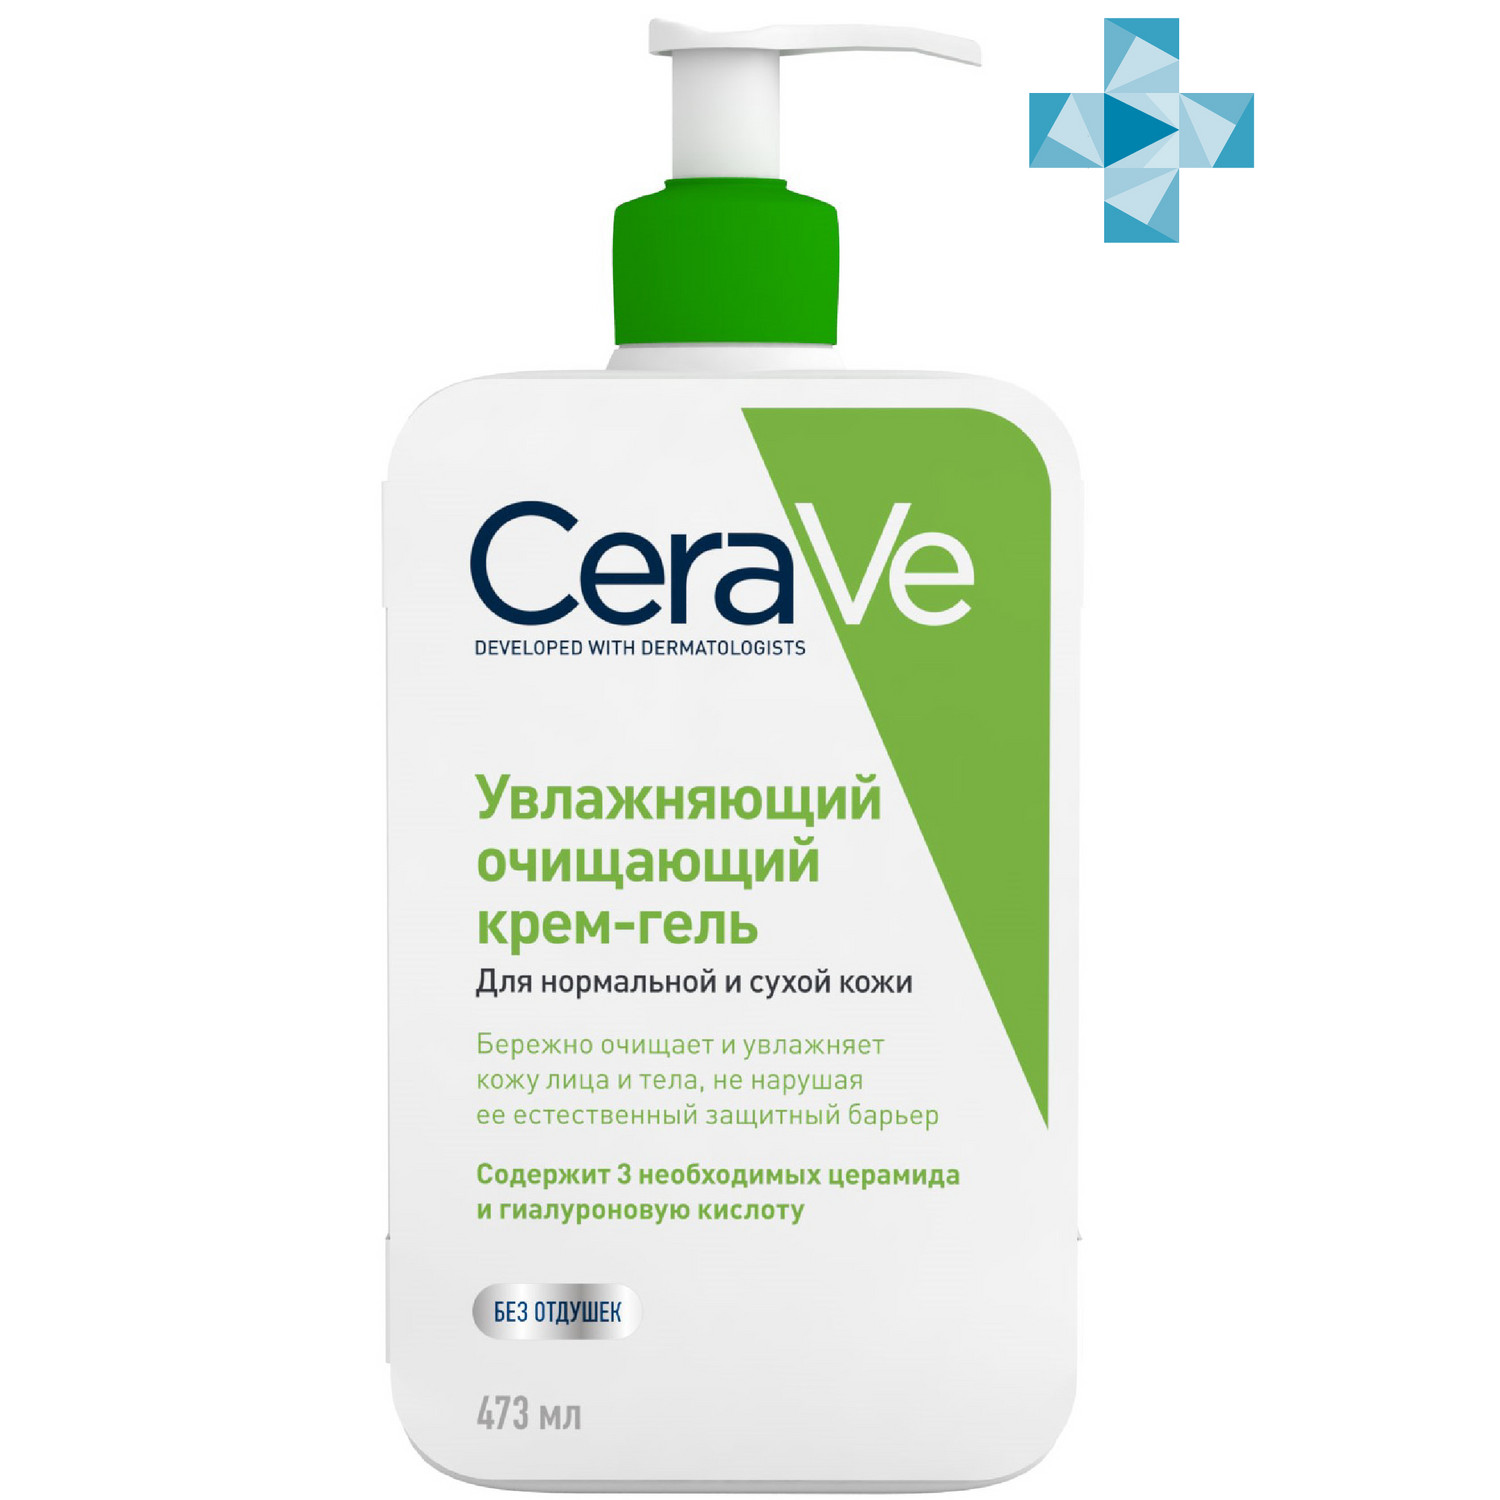 CeraVe Увлажняющий очищающий крем-гель с церамидами для норм